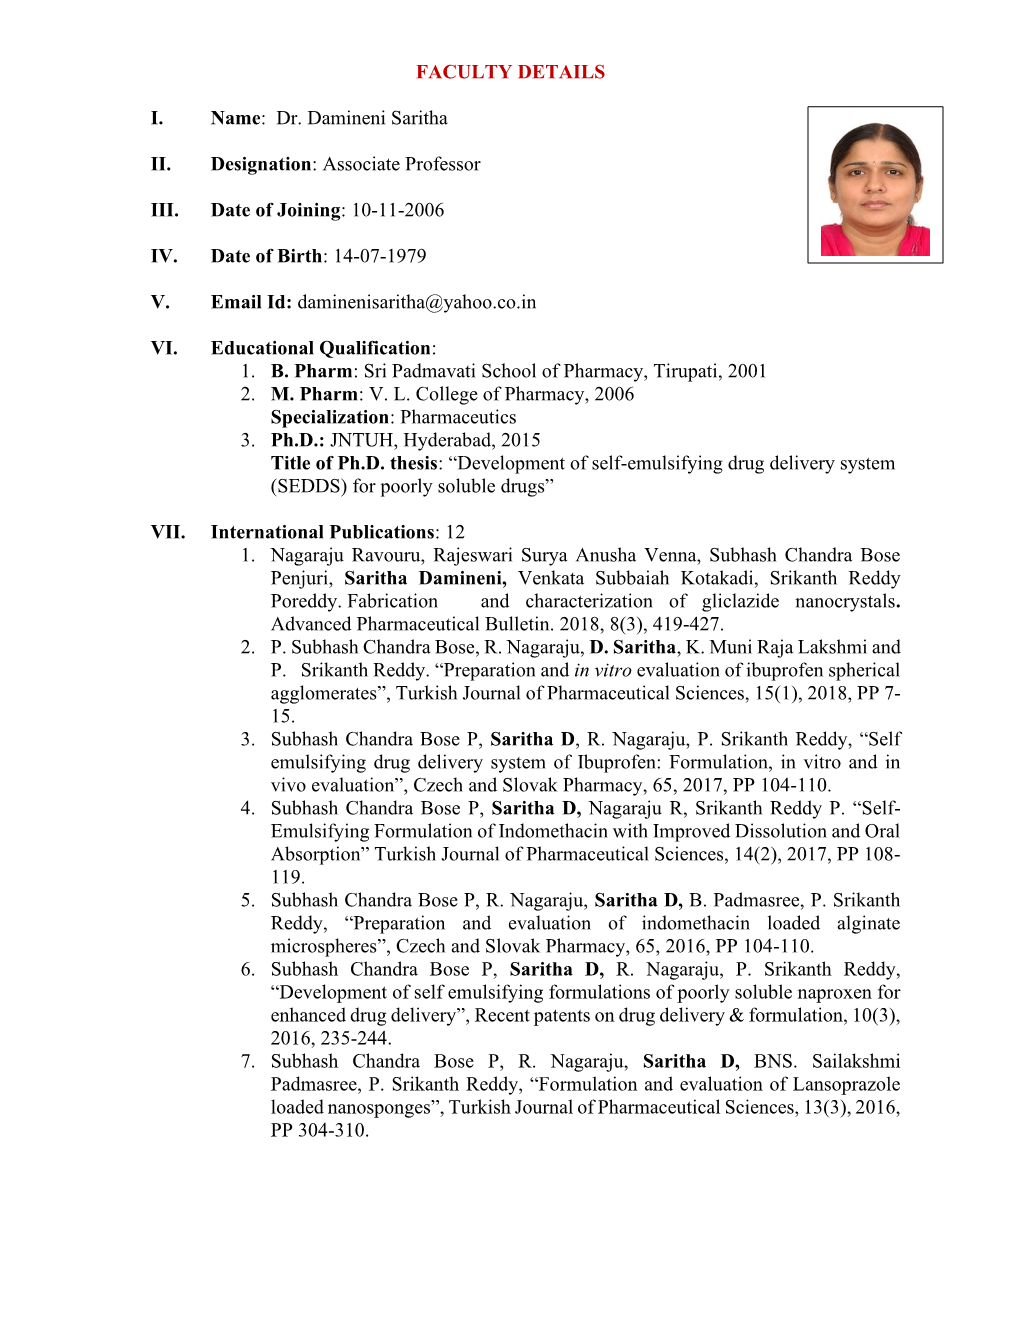 Dr. Damineni Saritha II. Designation